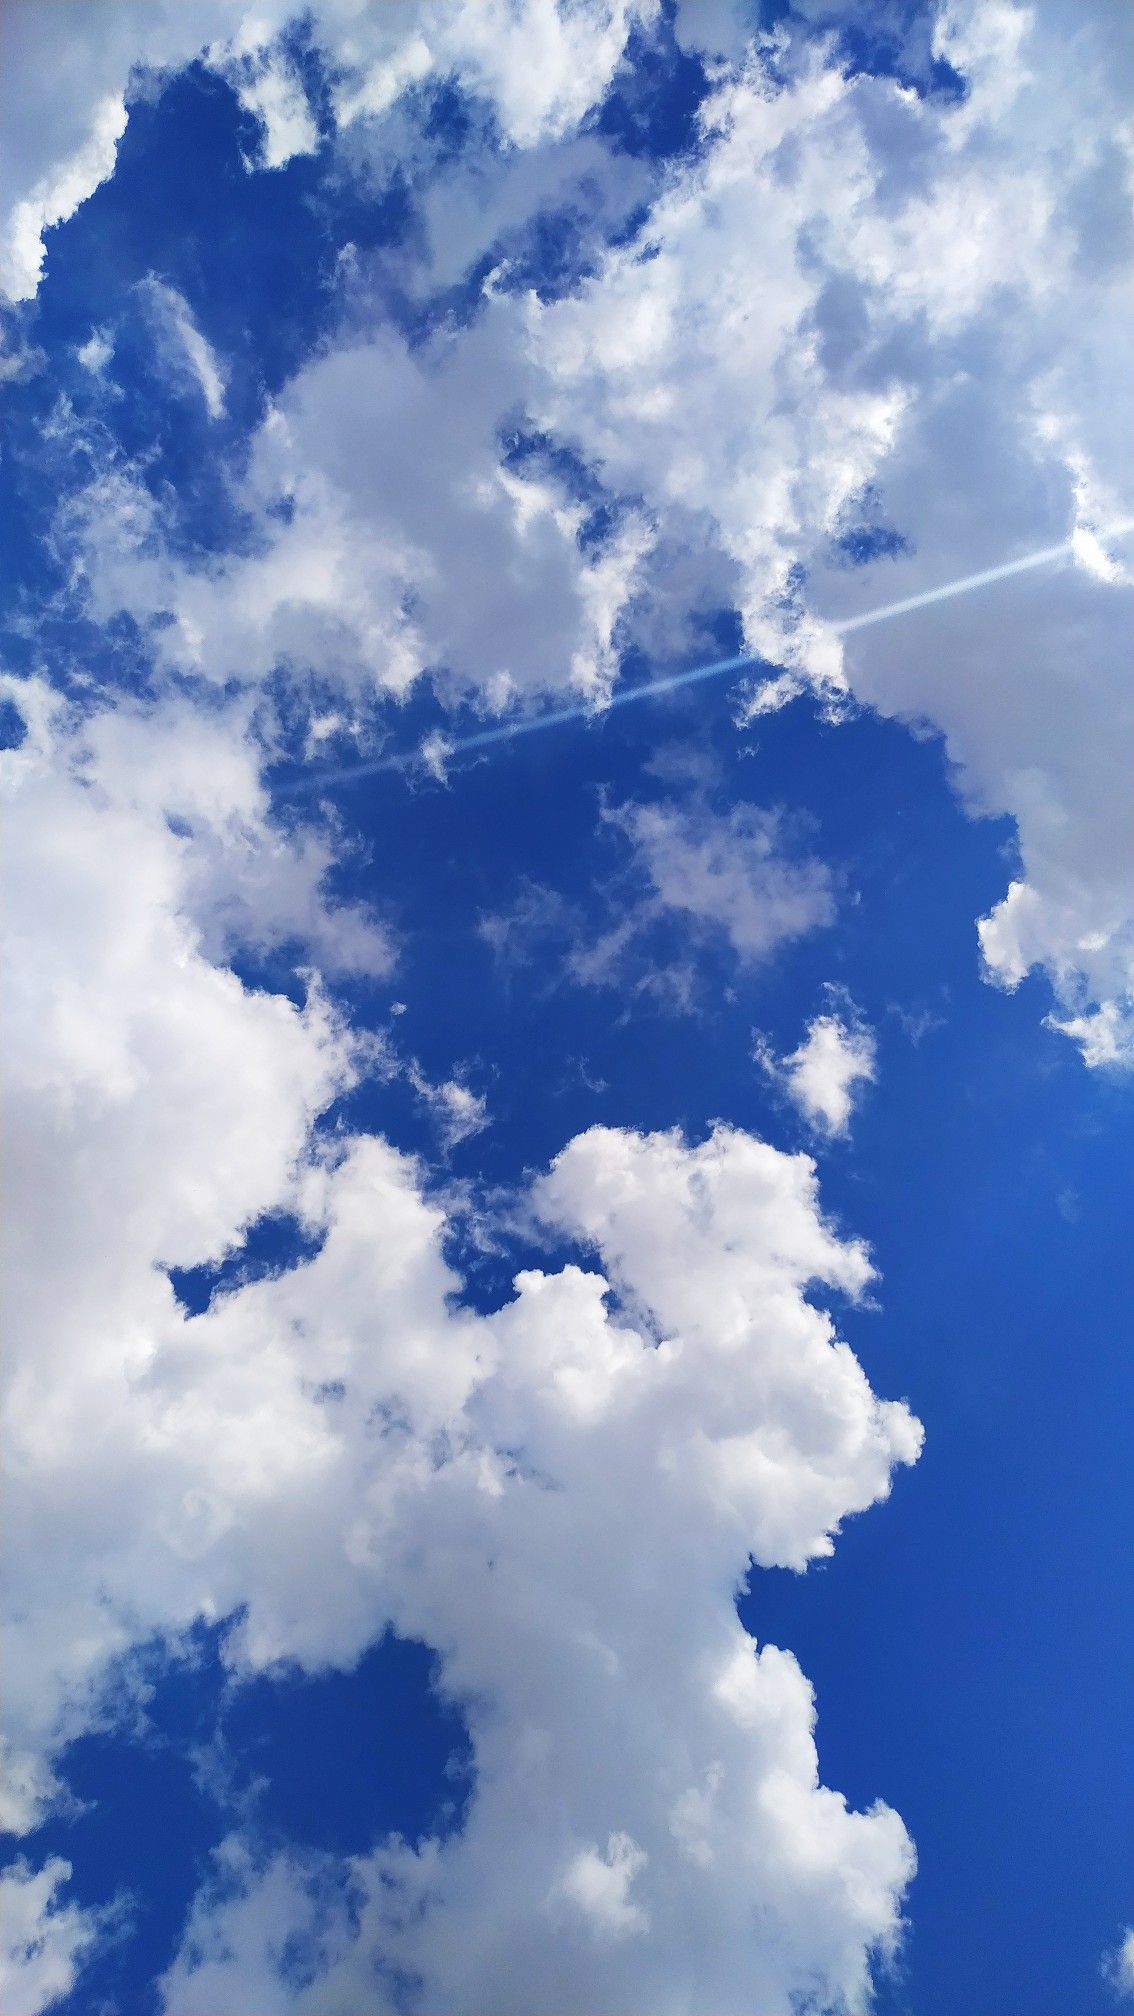 Cloud, cloud, clouds, sky, blue, blue sky, ☁, white cloud, blue cloud., Cloud picture, picture, bi. Blue sky wallpaper, Blue sky clouds, Picture cloud